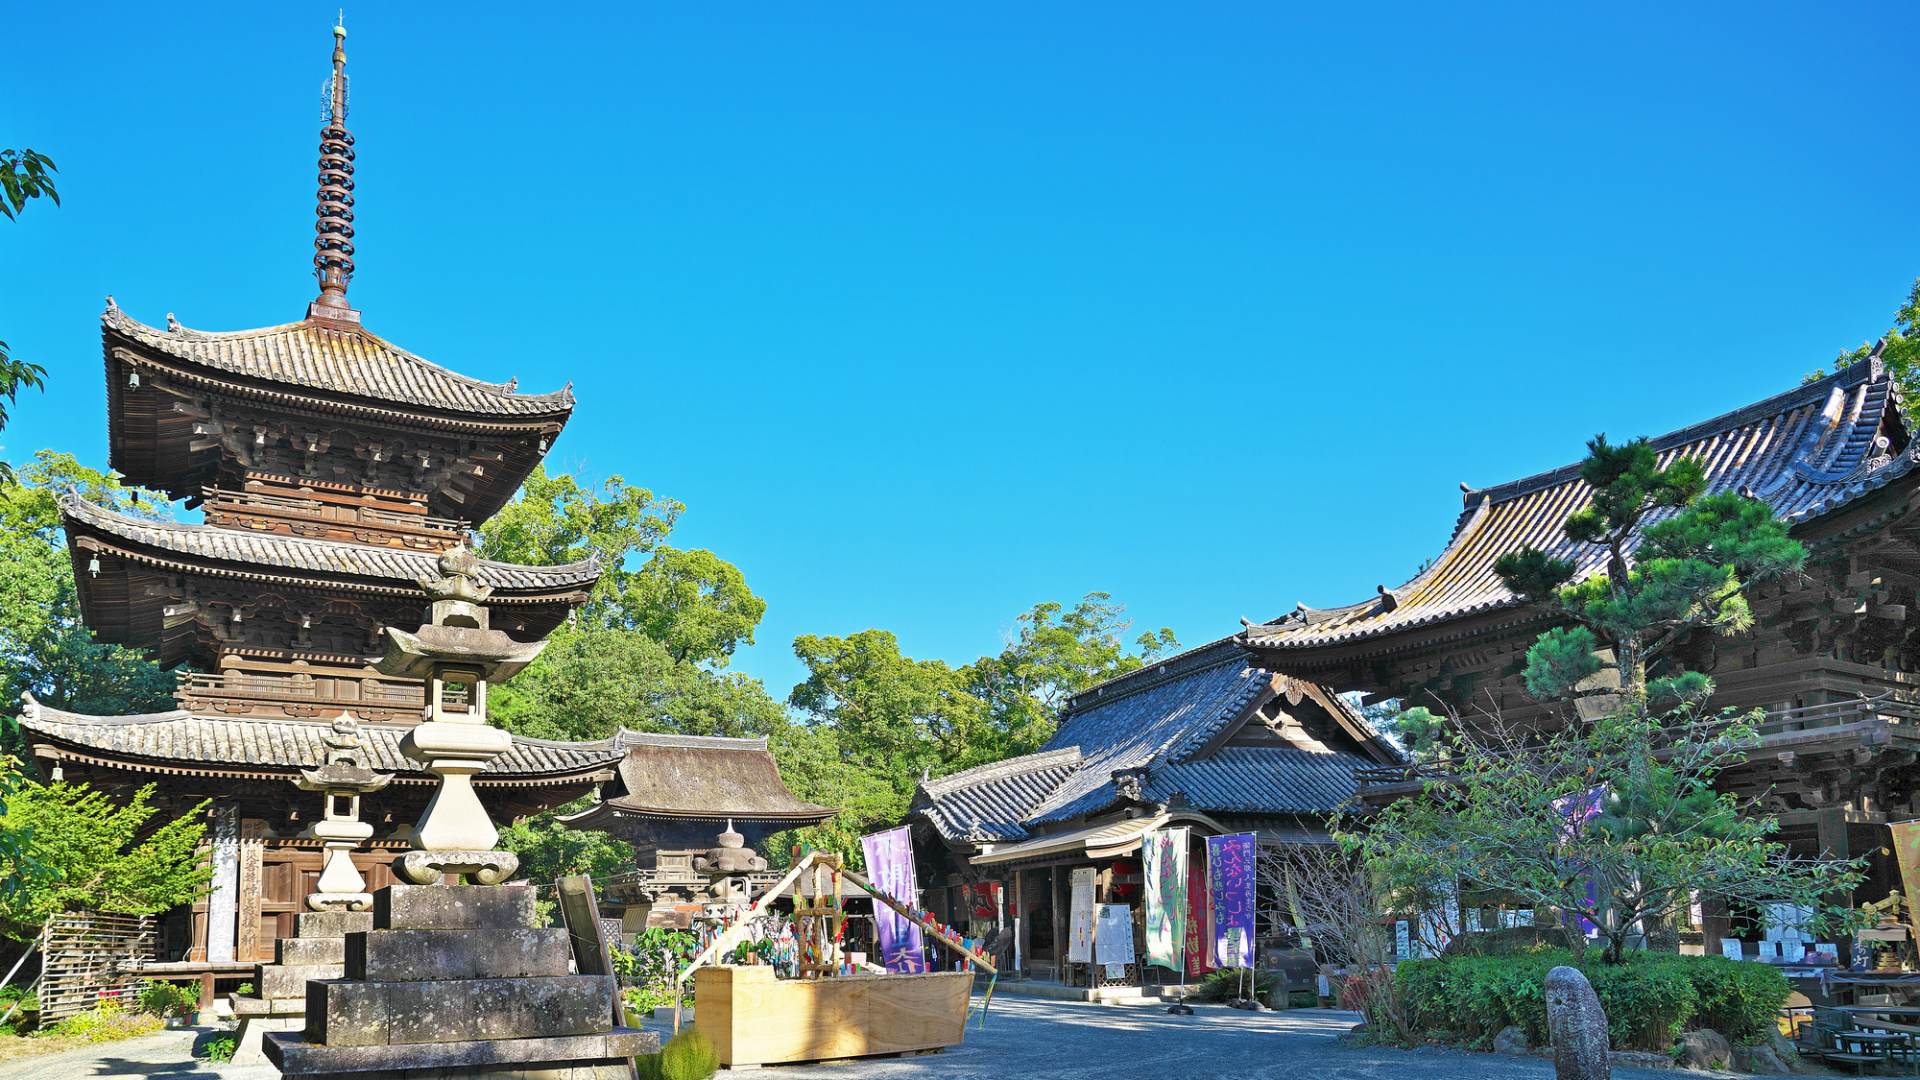 Ishiteji temple